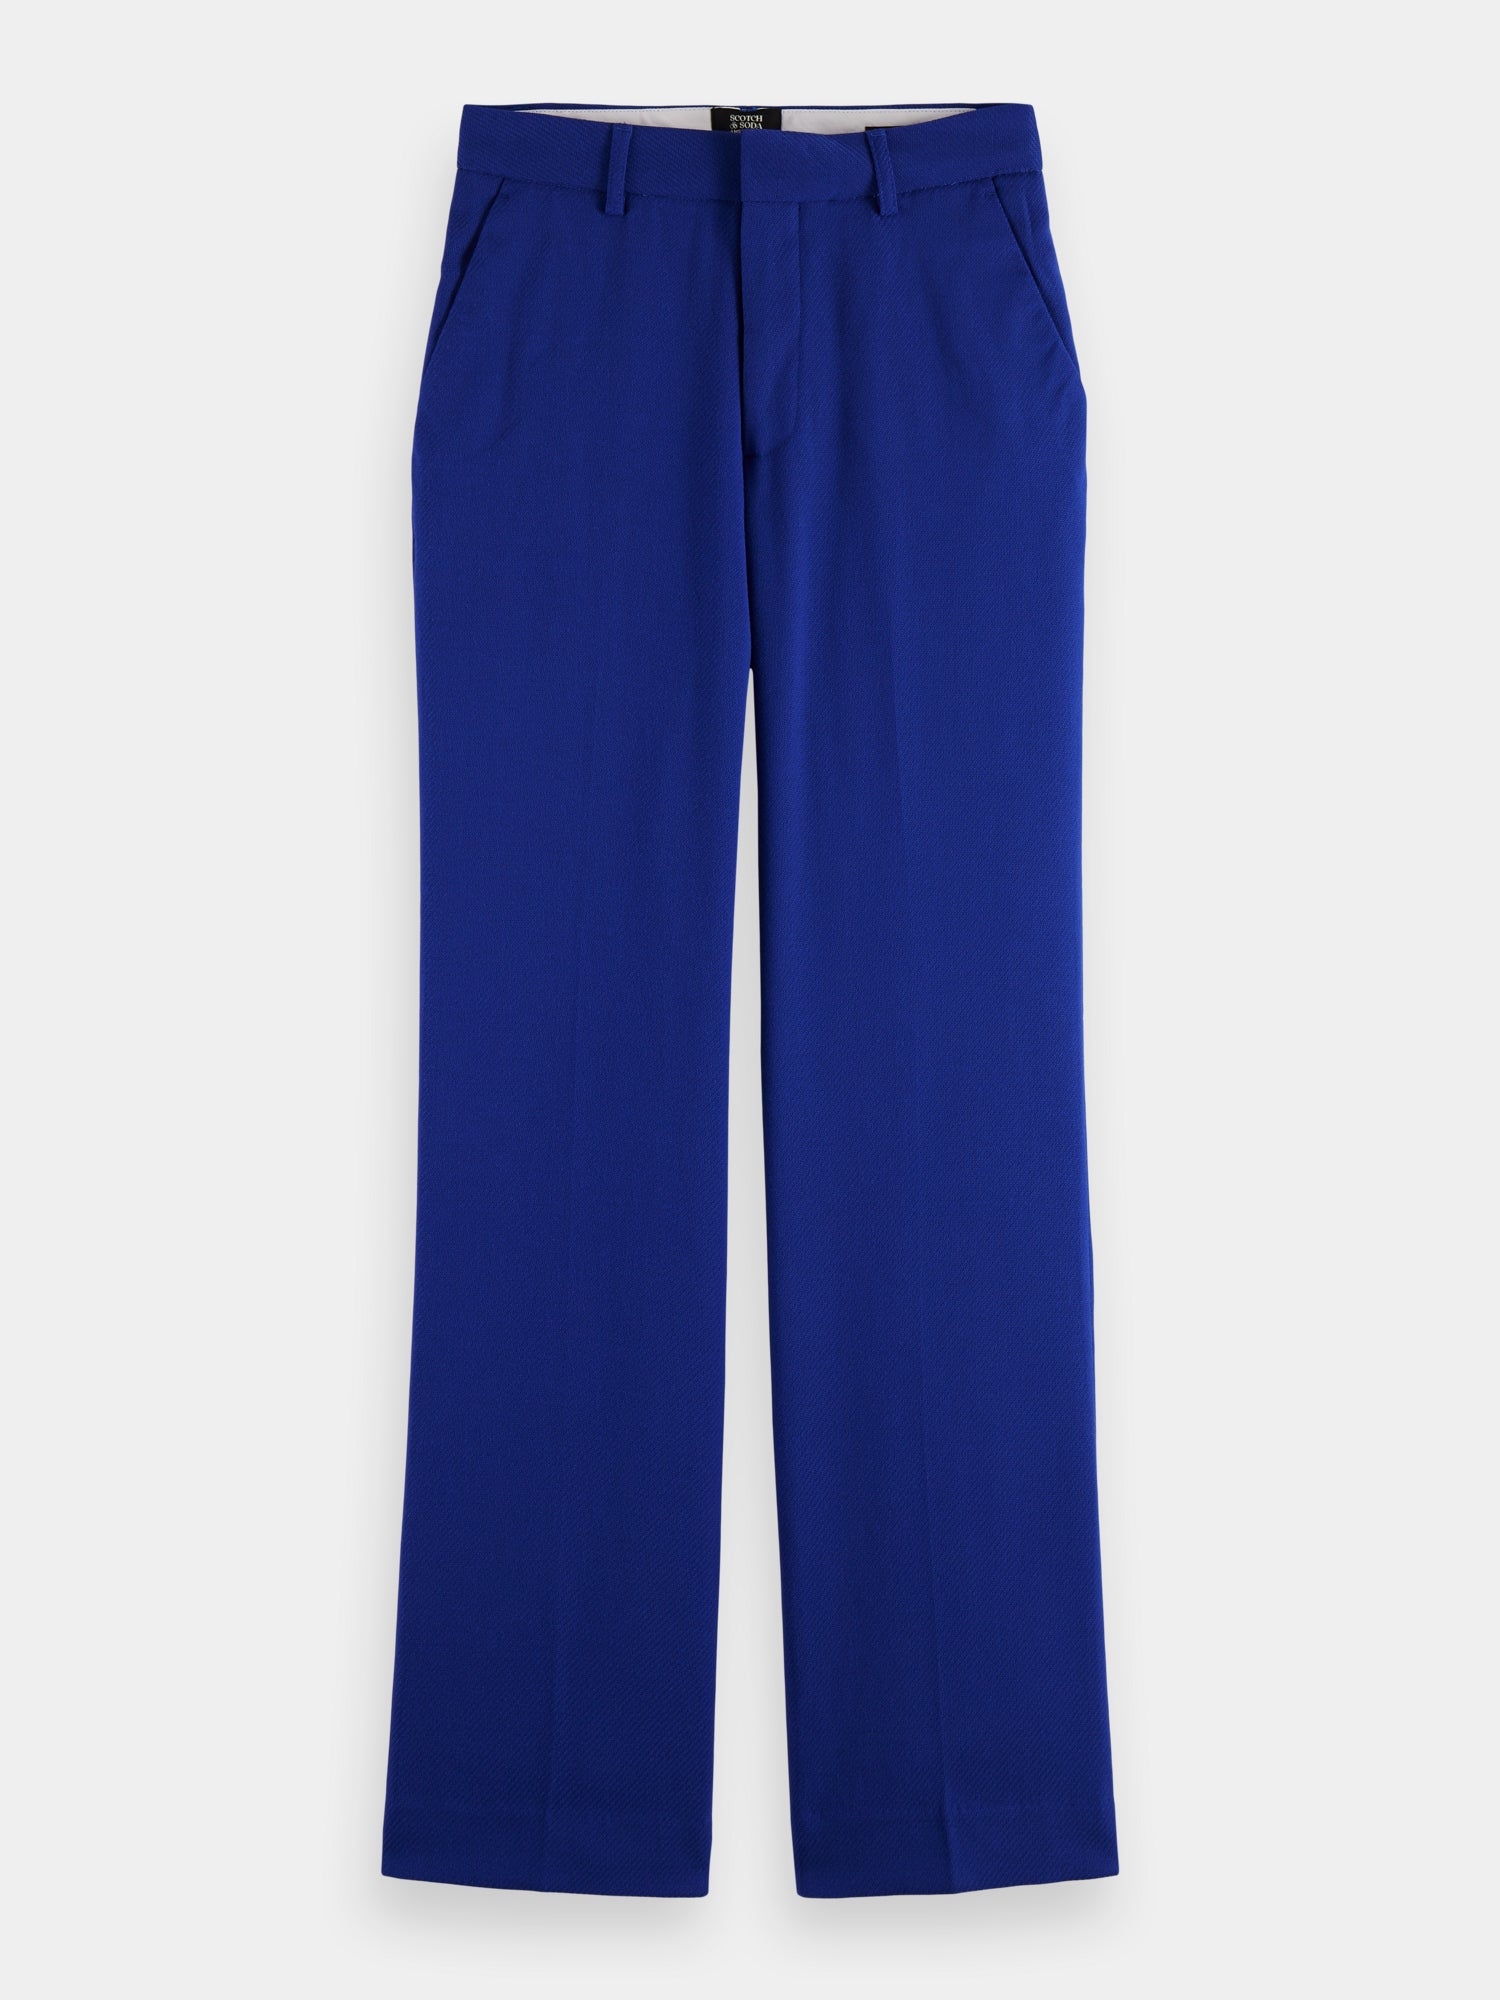 Crêpe pull-on trousers - Bright blue - Ladies | H&M